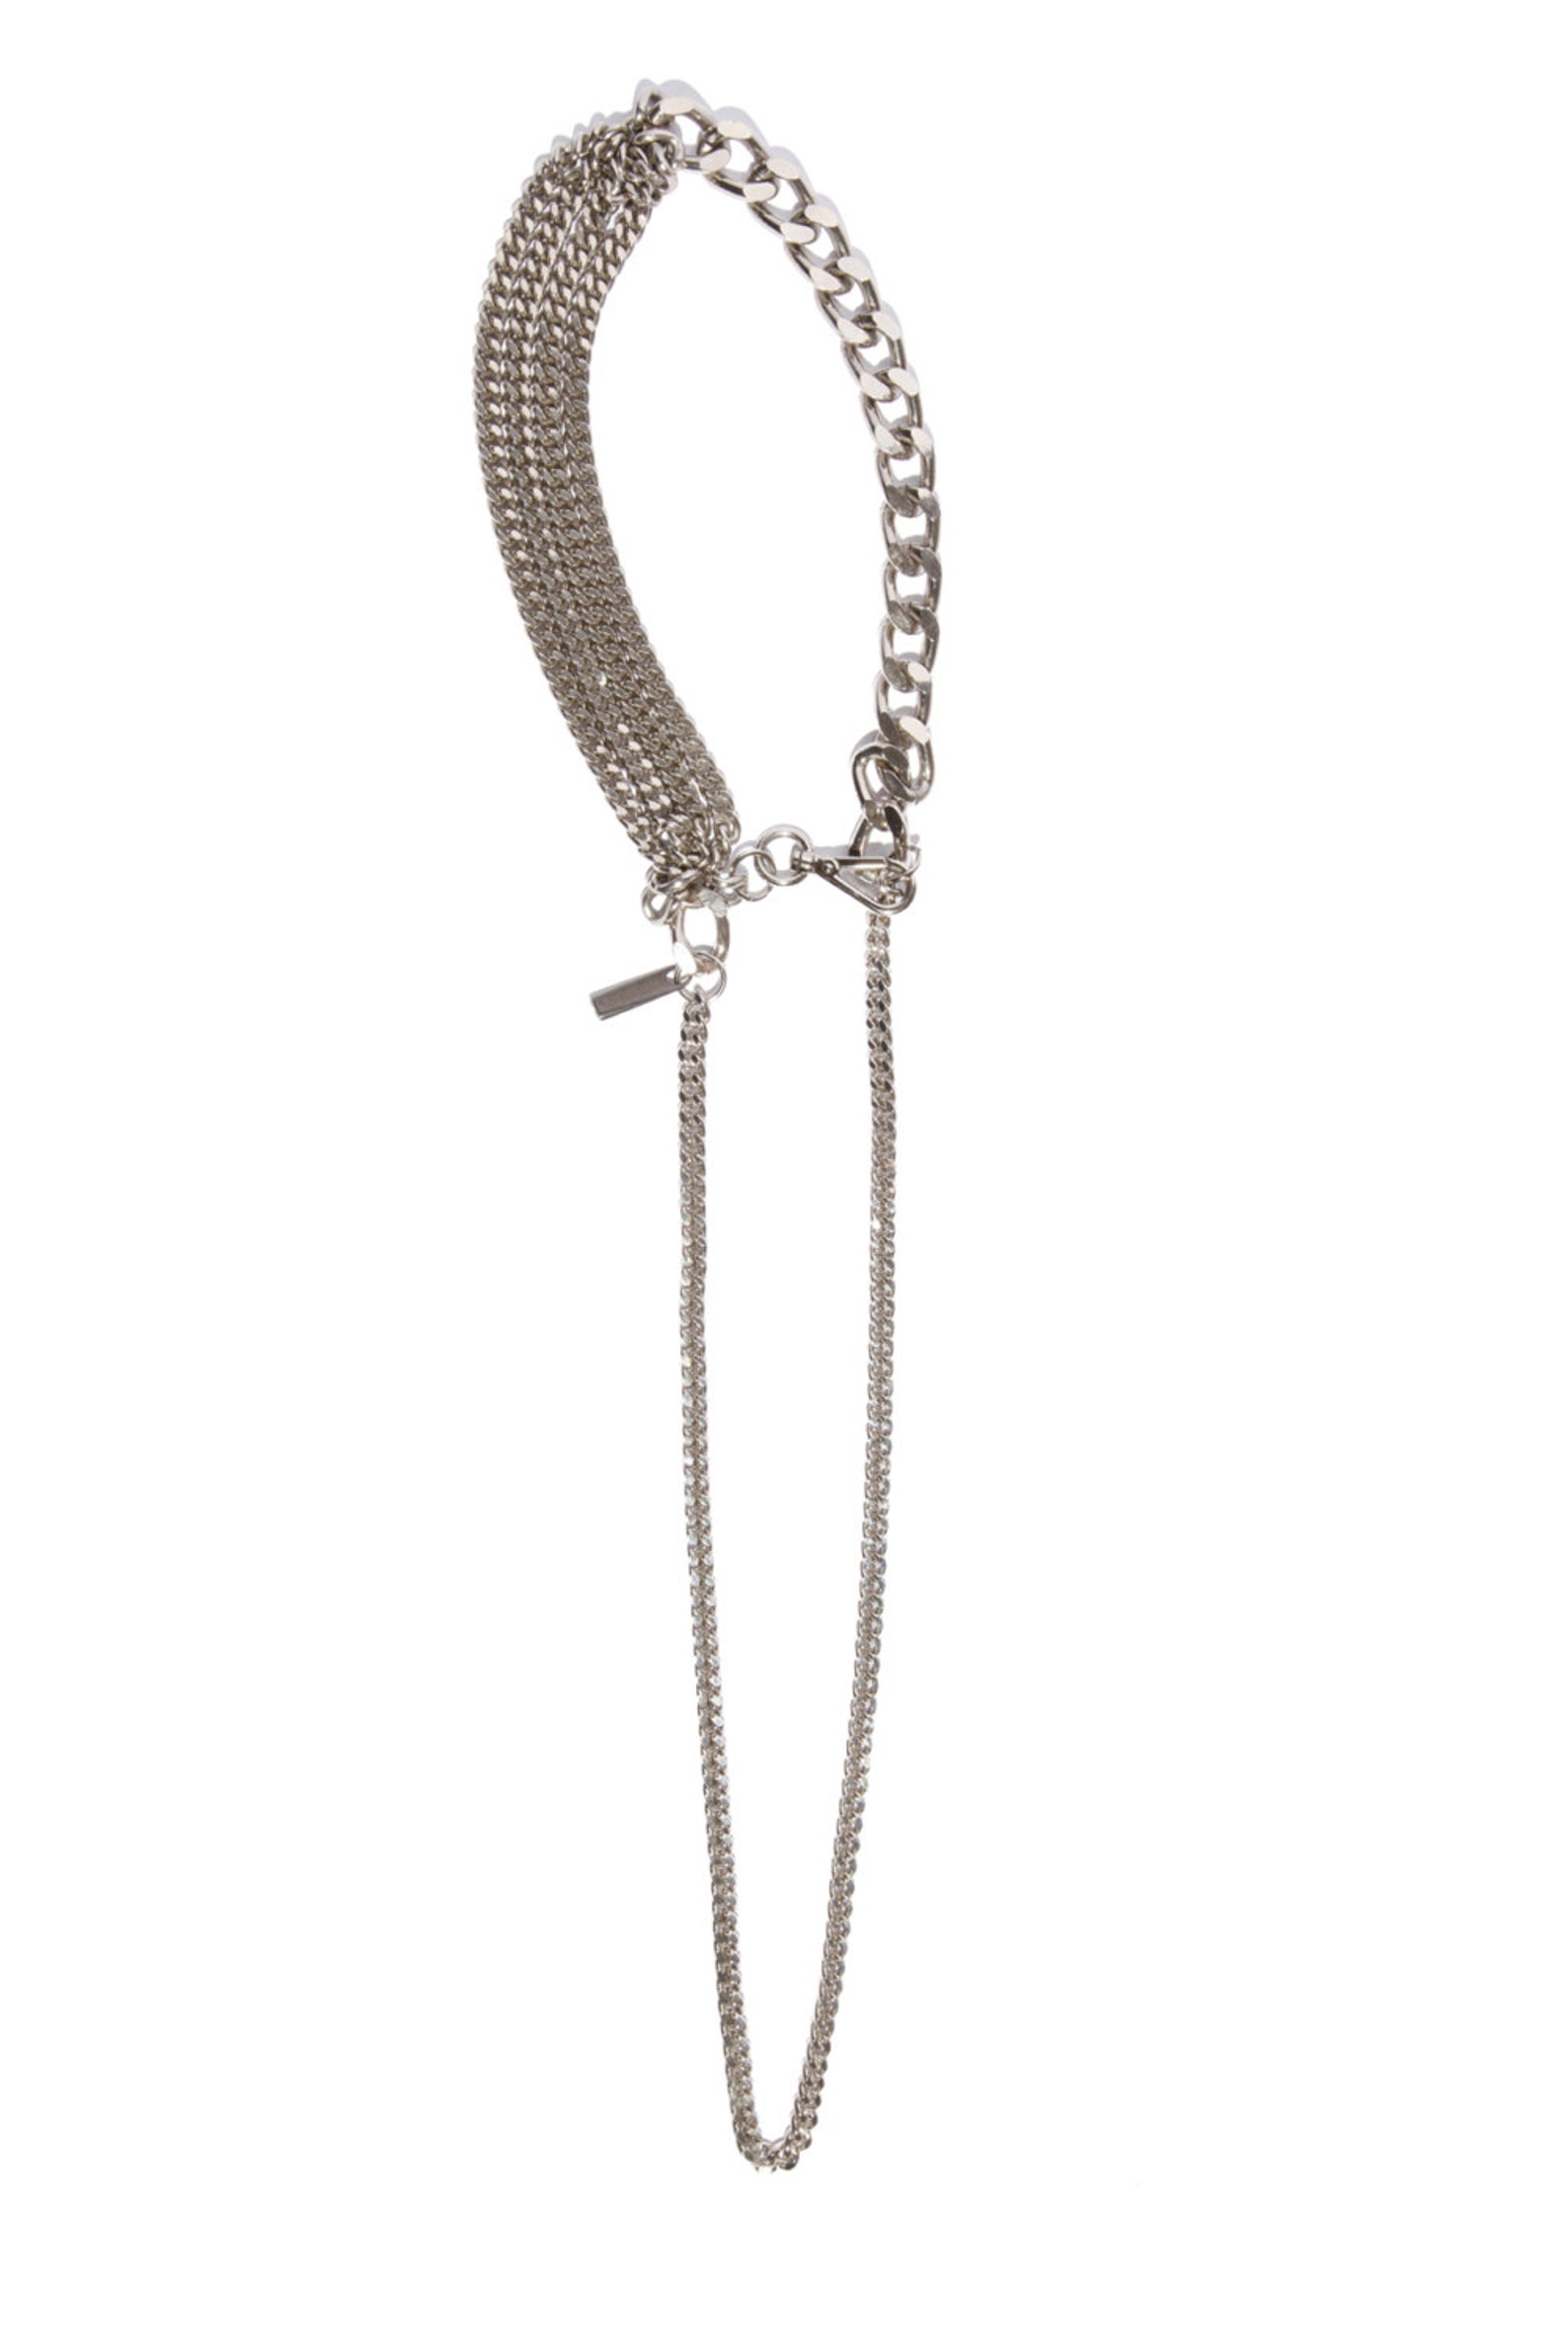 Punk Rock Silver Multi Chain Necklace Biker Chain Necklace | Etsy